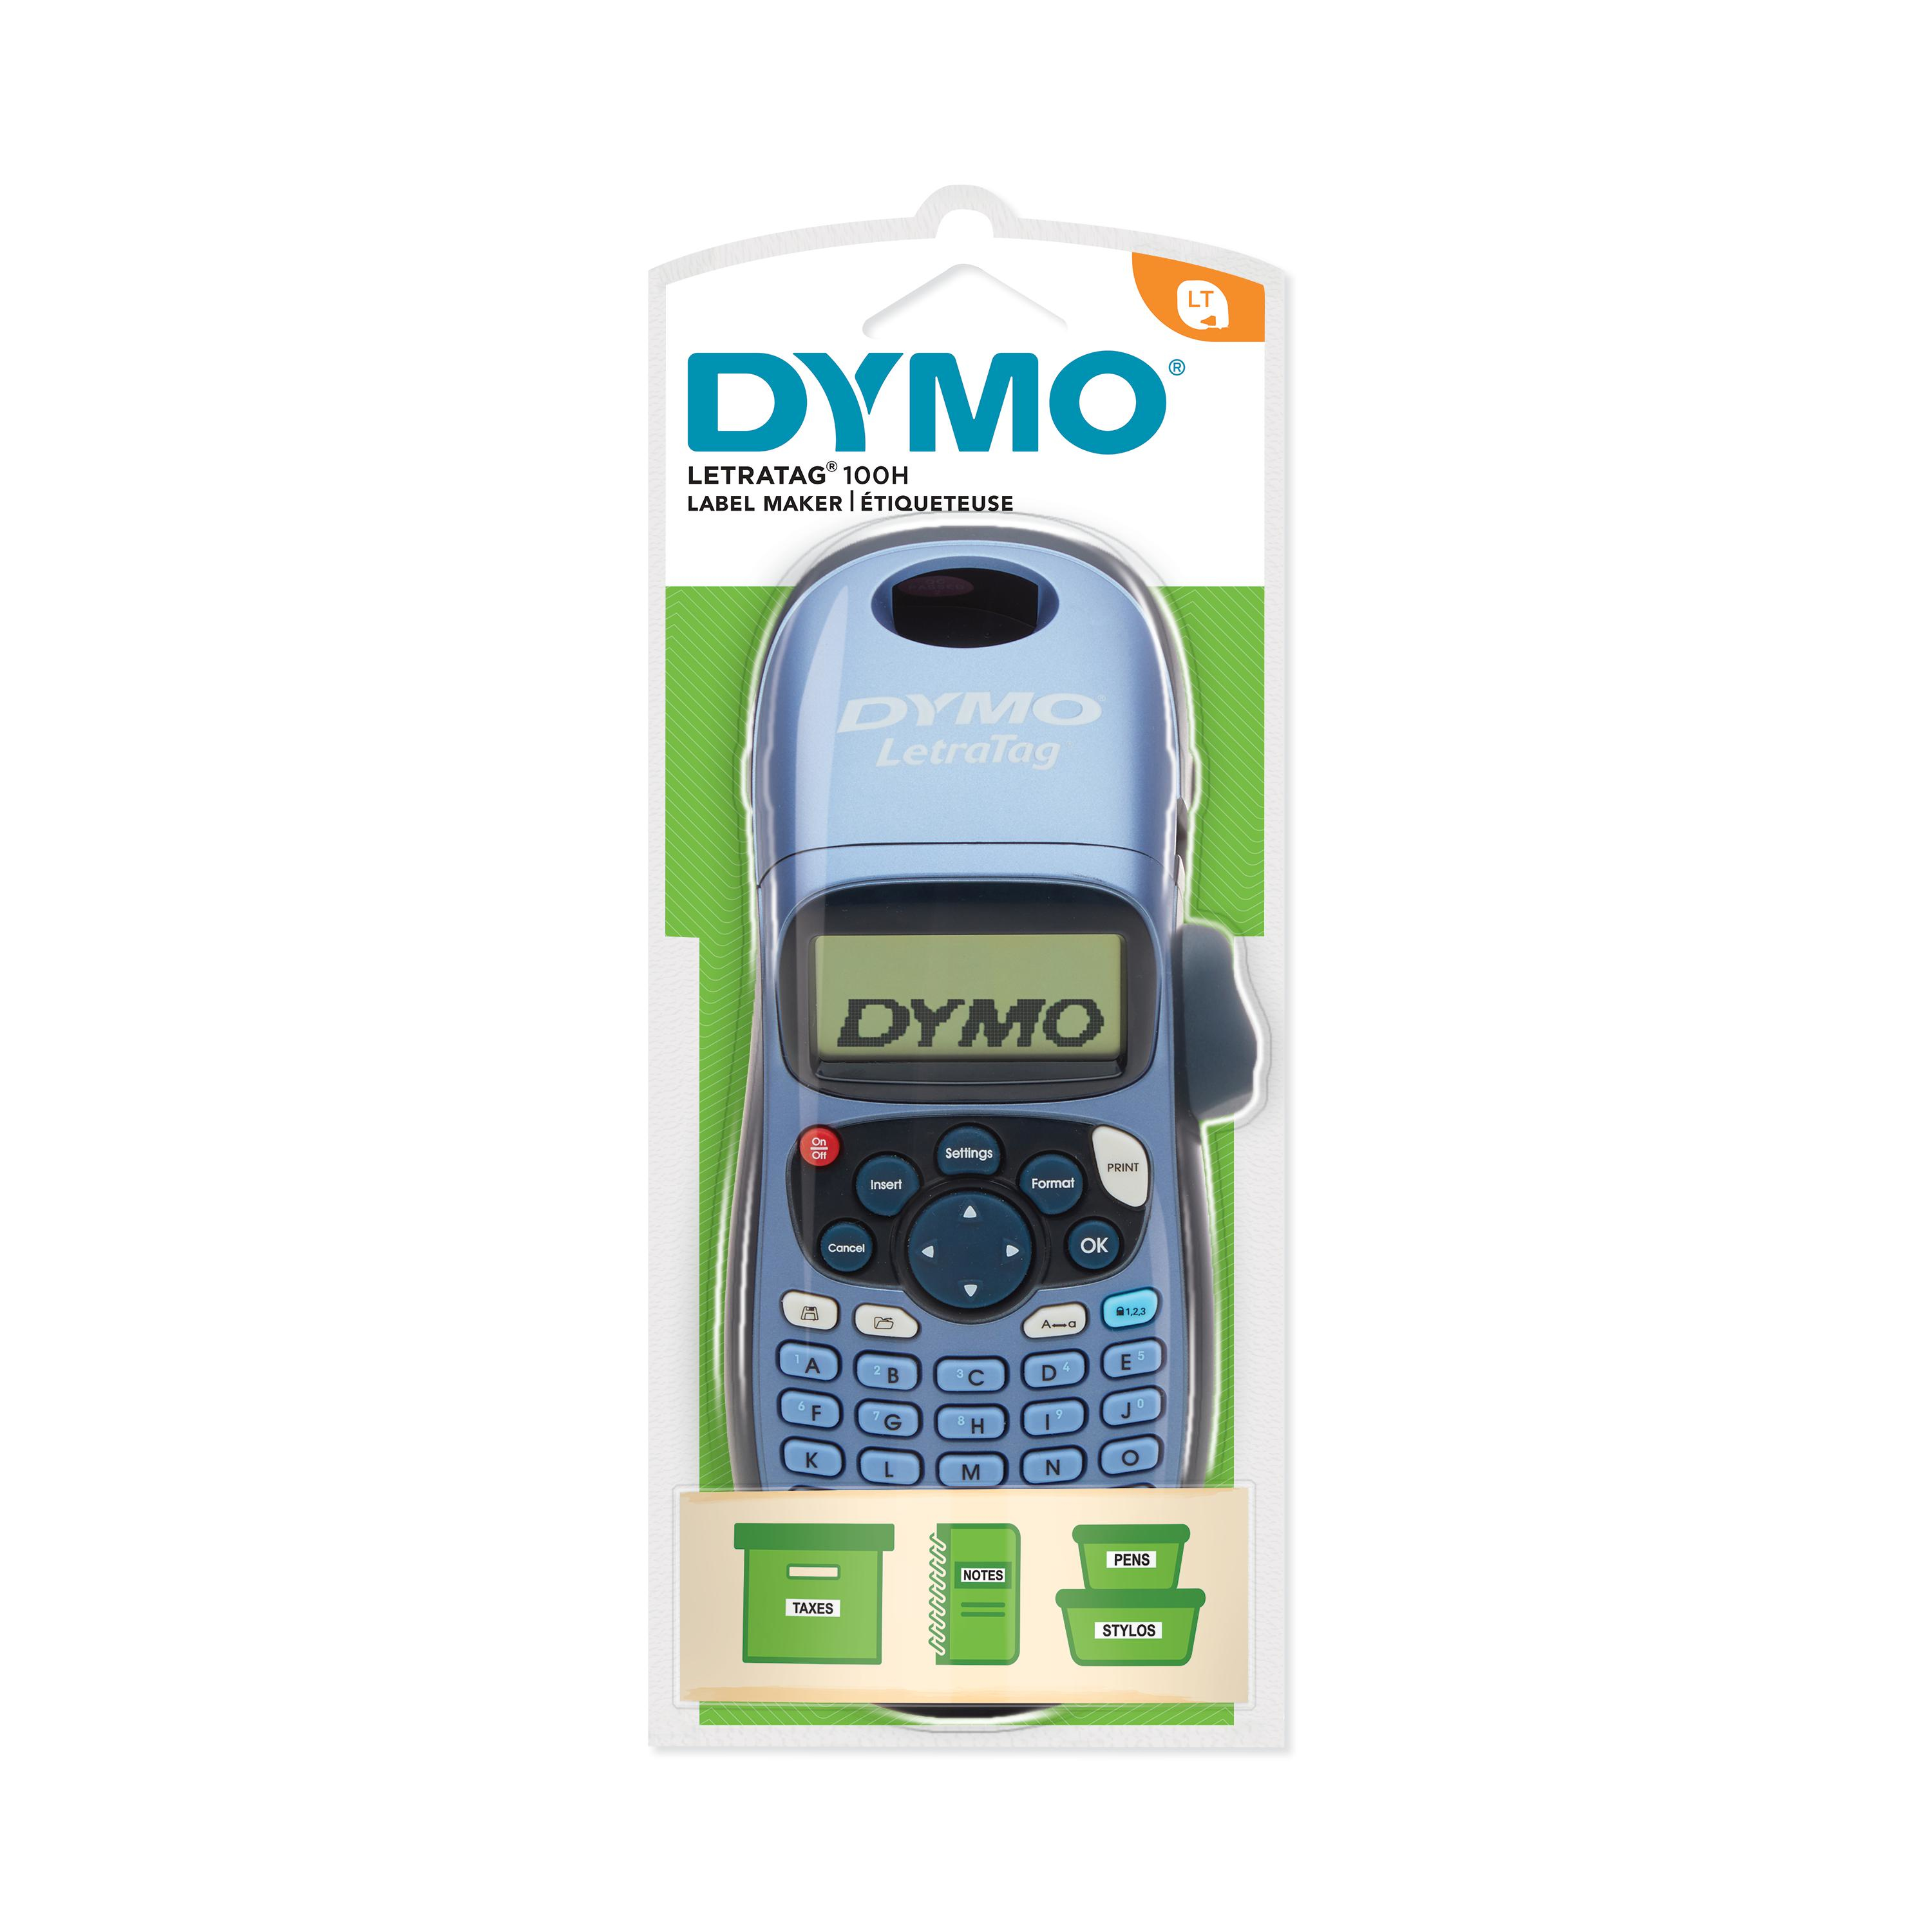 DYMO LetraTag LT-100H blau Handgerät ABC-Tastatur - 2174576